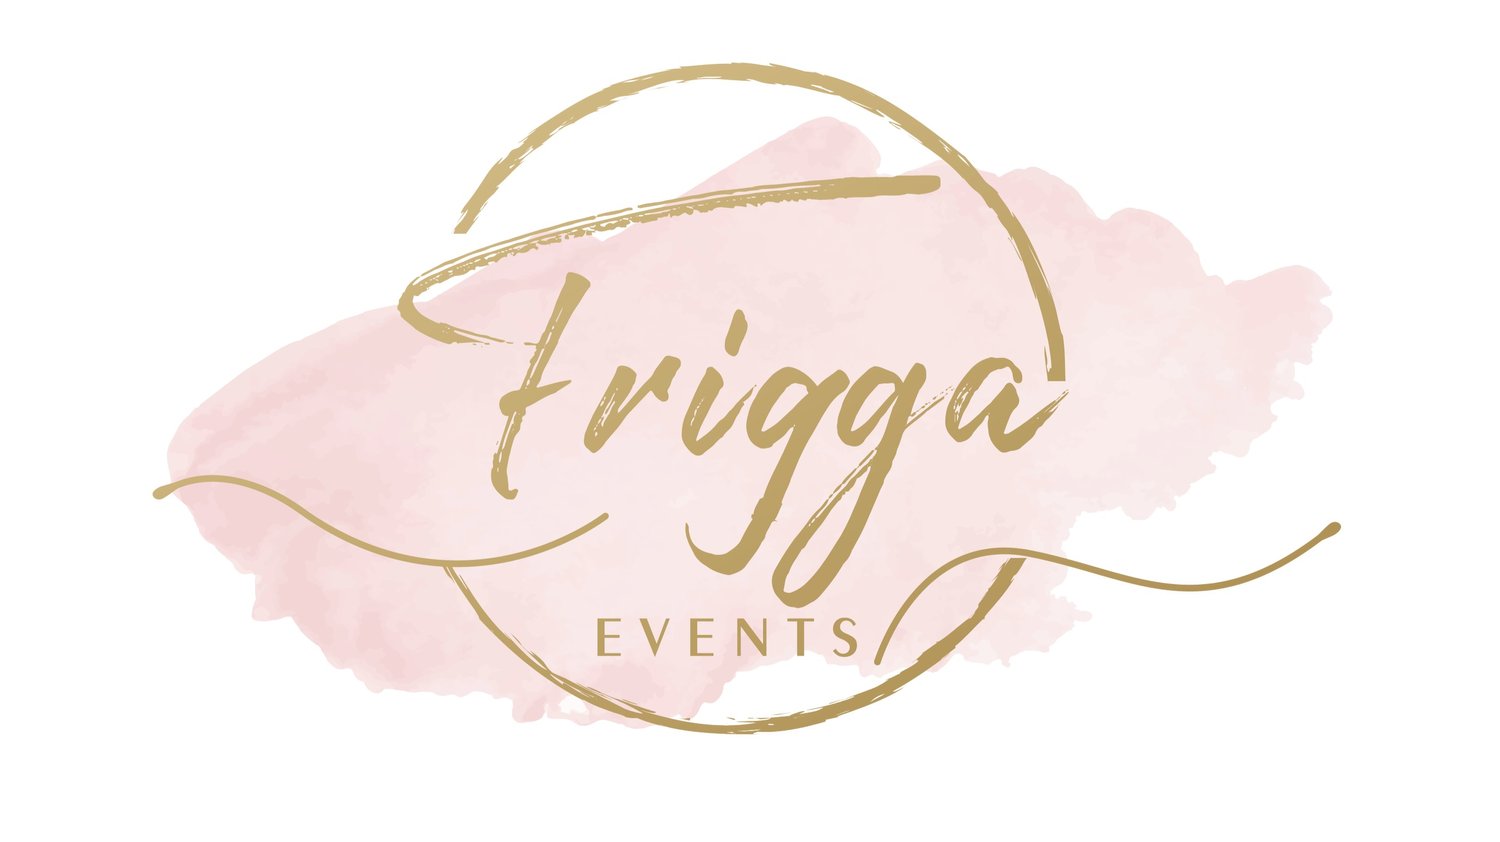 Frigga Events